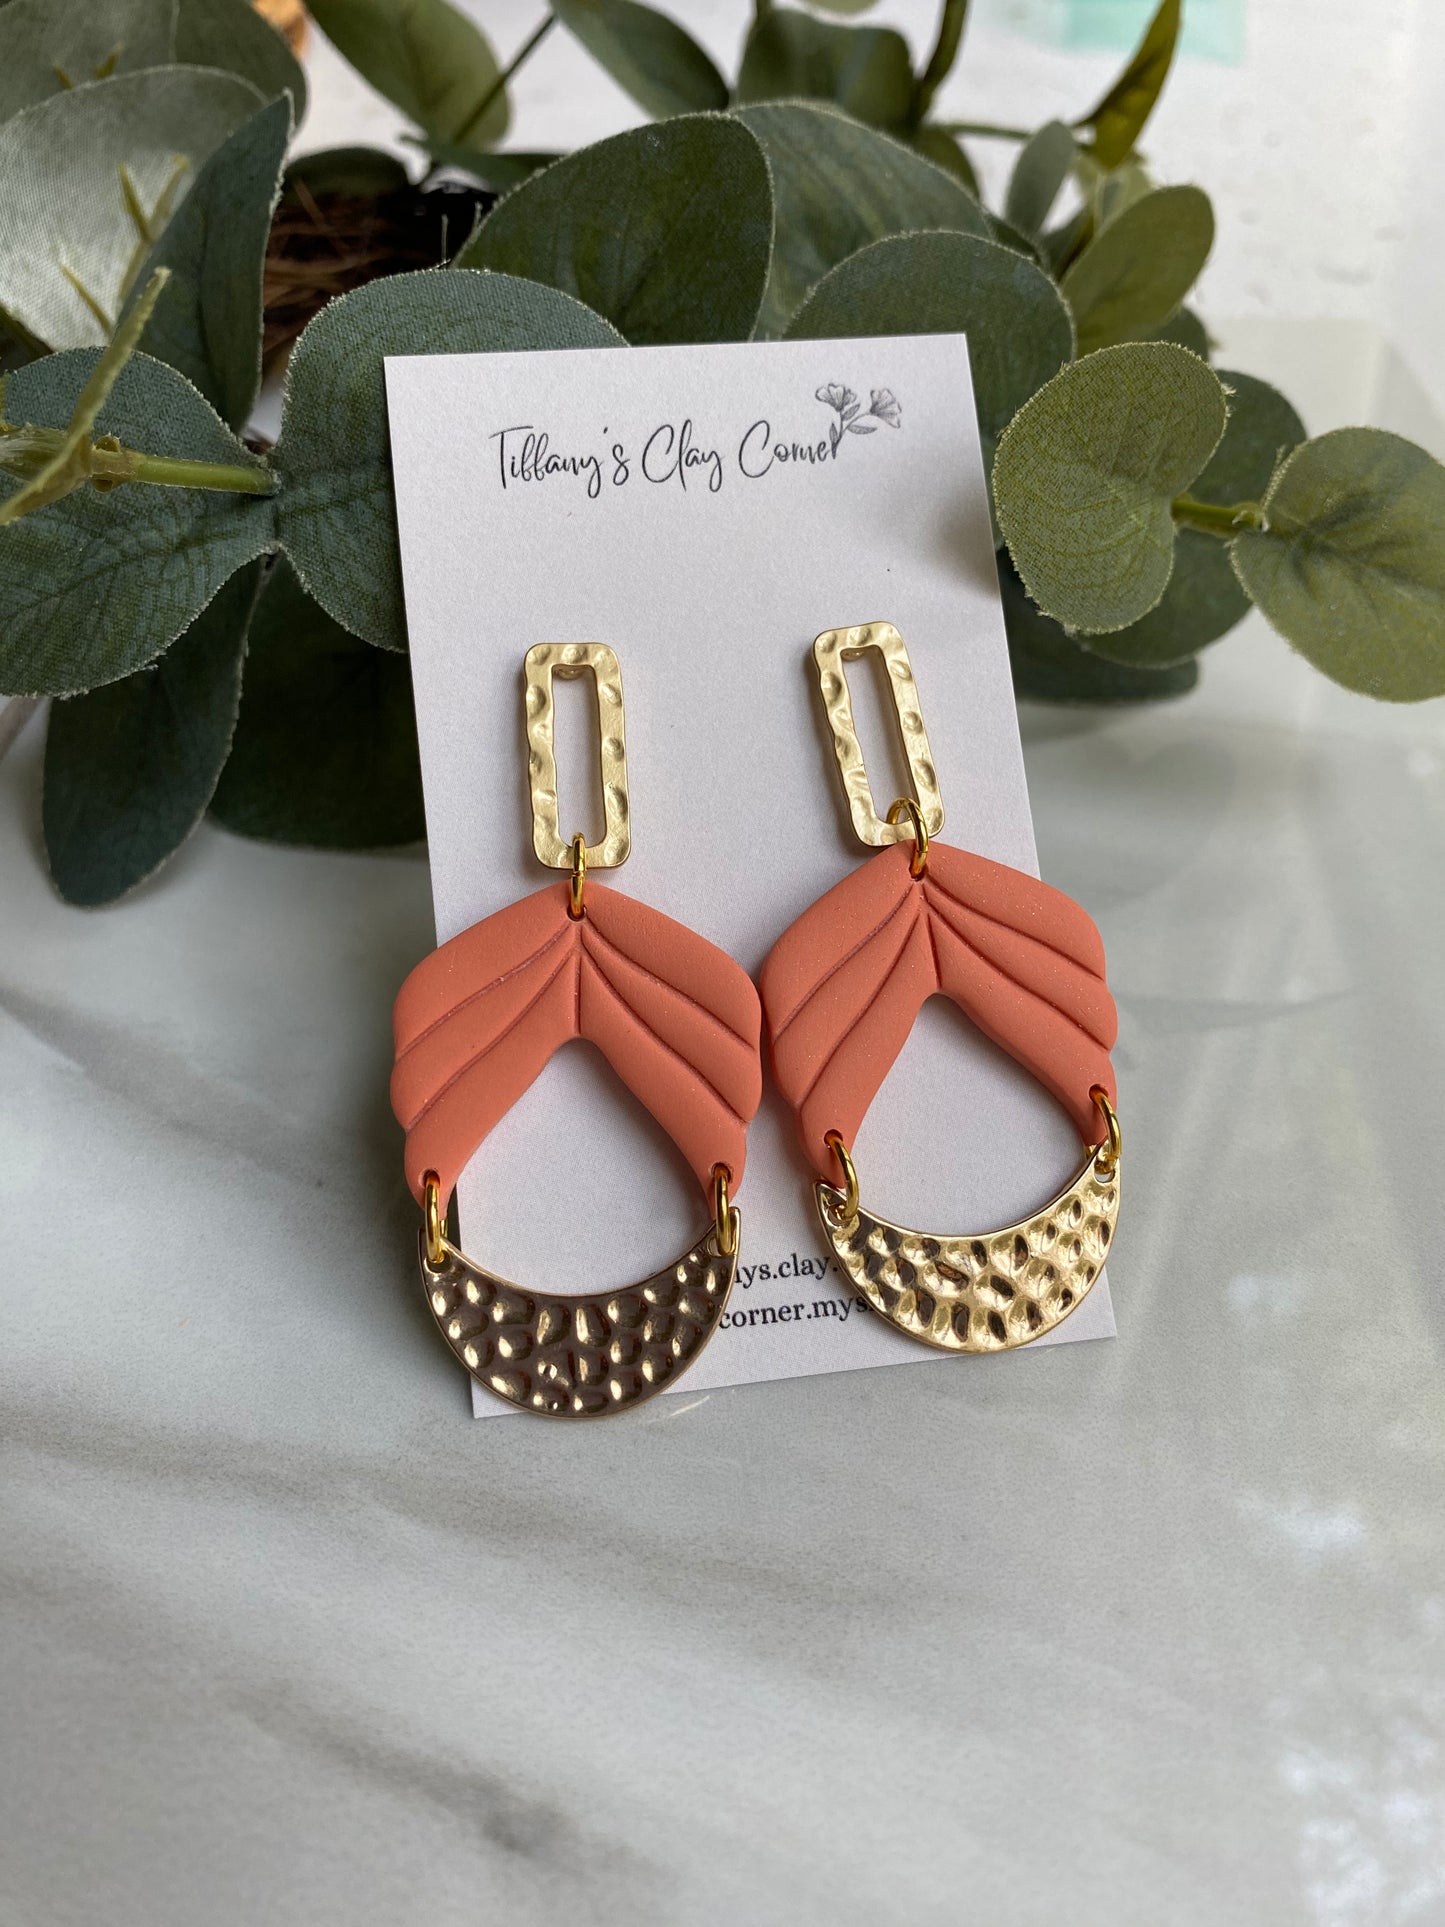 A. Golden Peach Clay Earrings